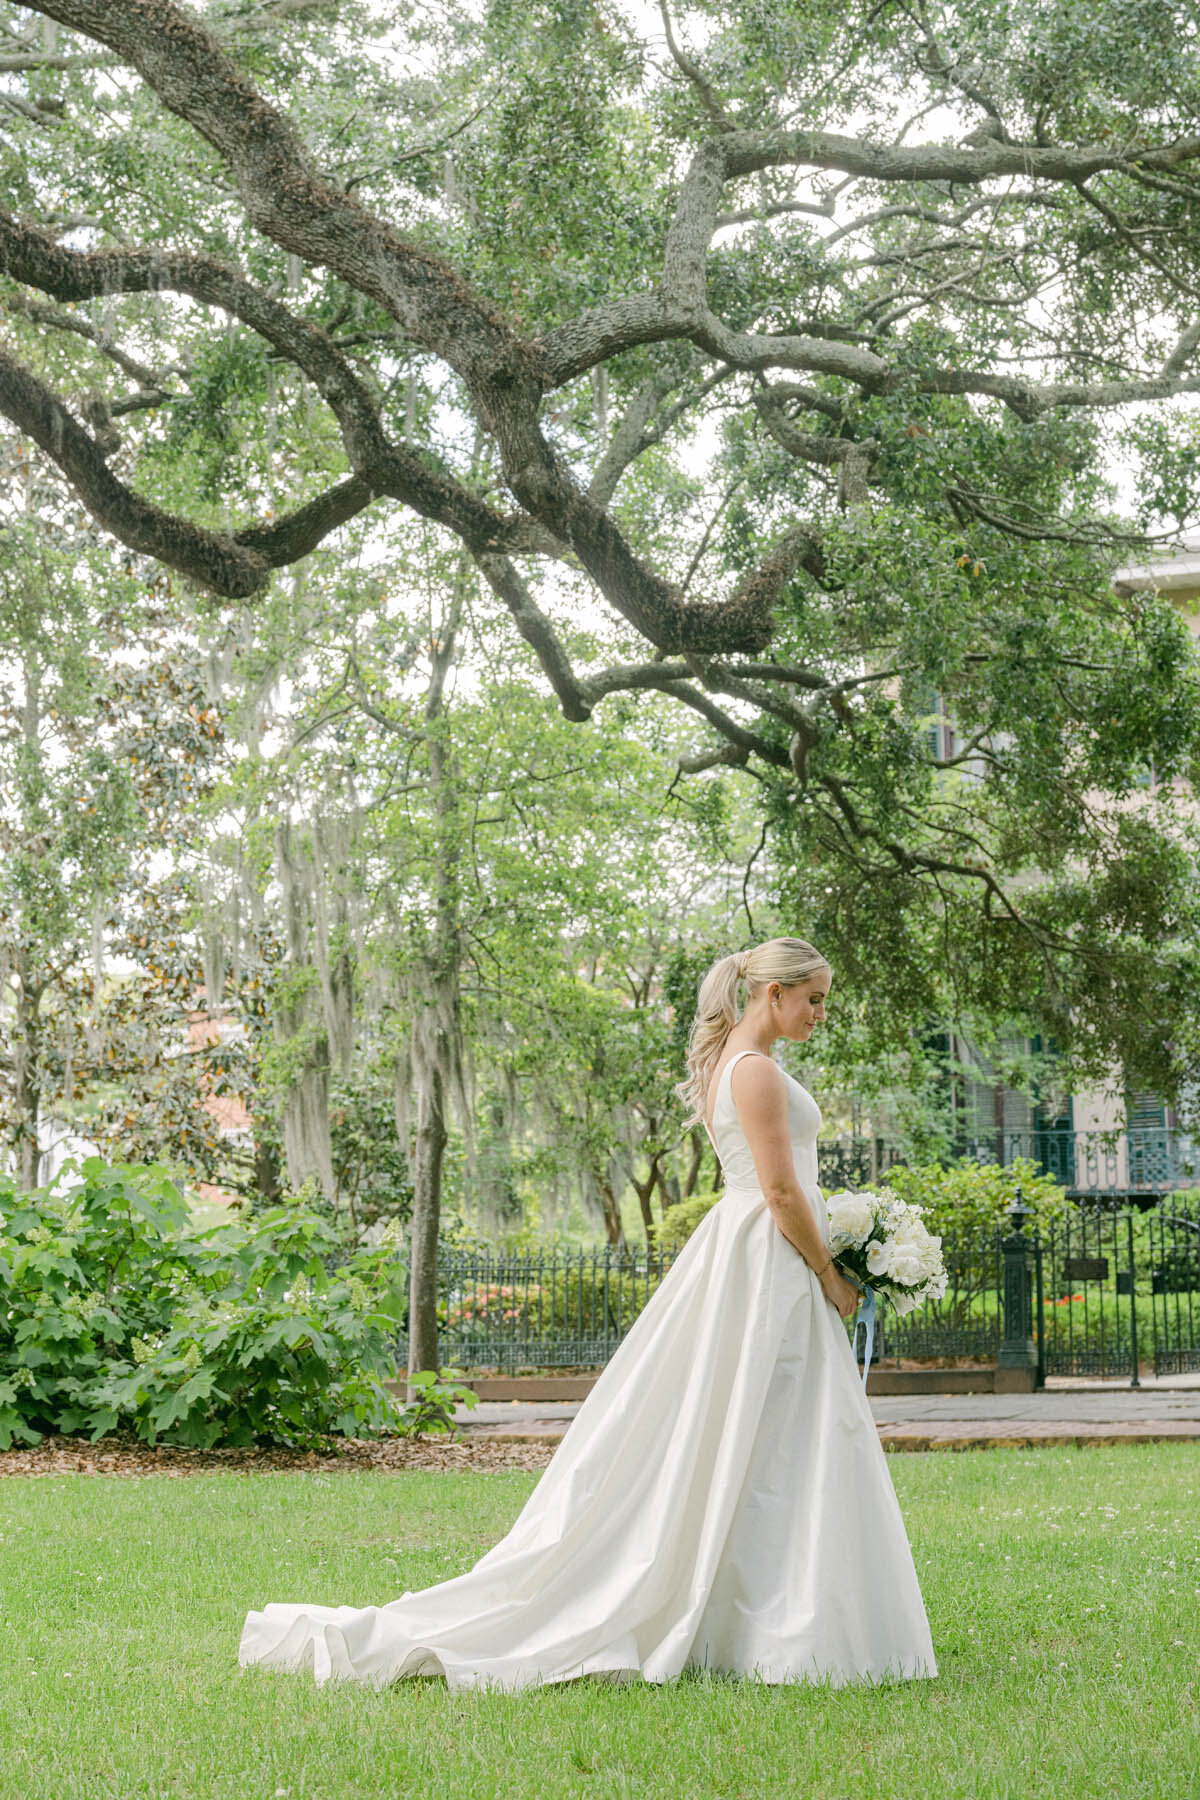 Savannah-Georgia-wedding-planner-destinctive-events-kelli boyd photography0017